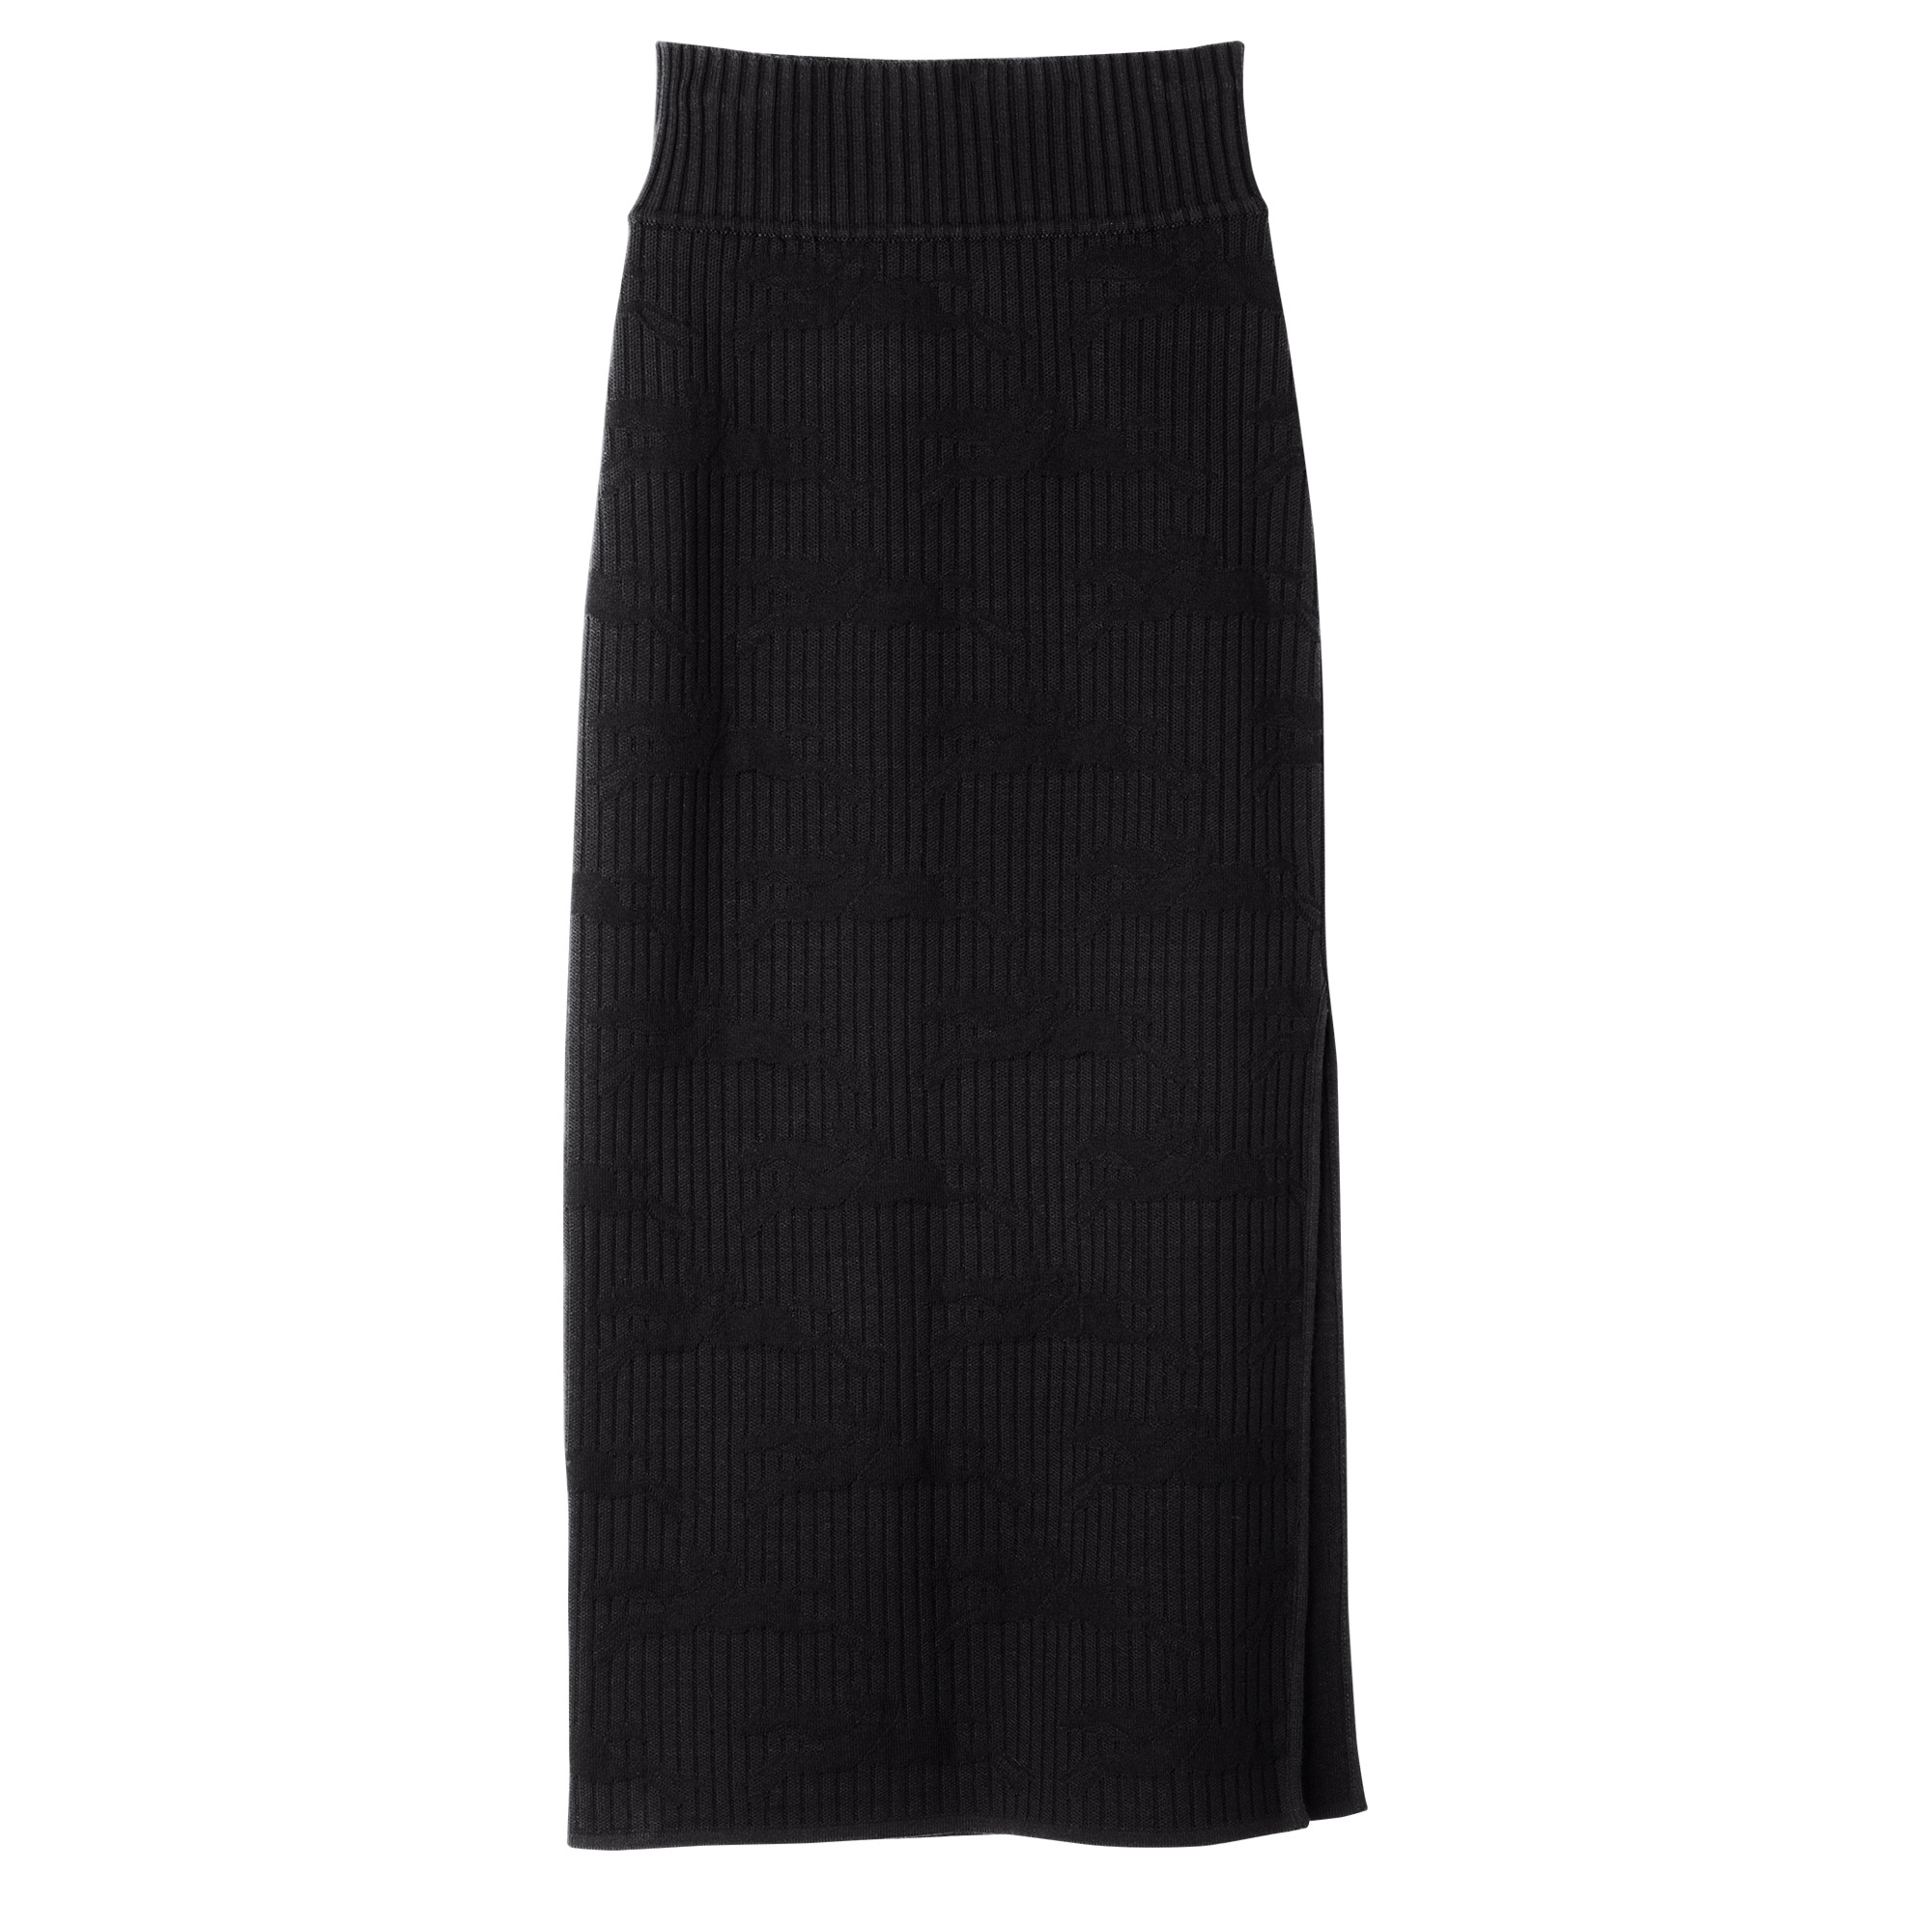 Midi skirt Black - Knit - 1